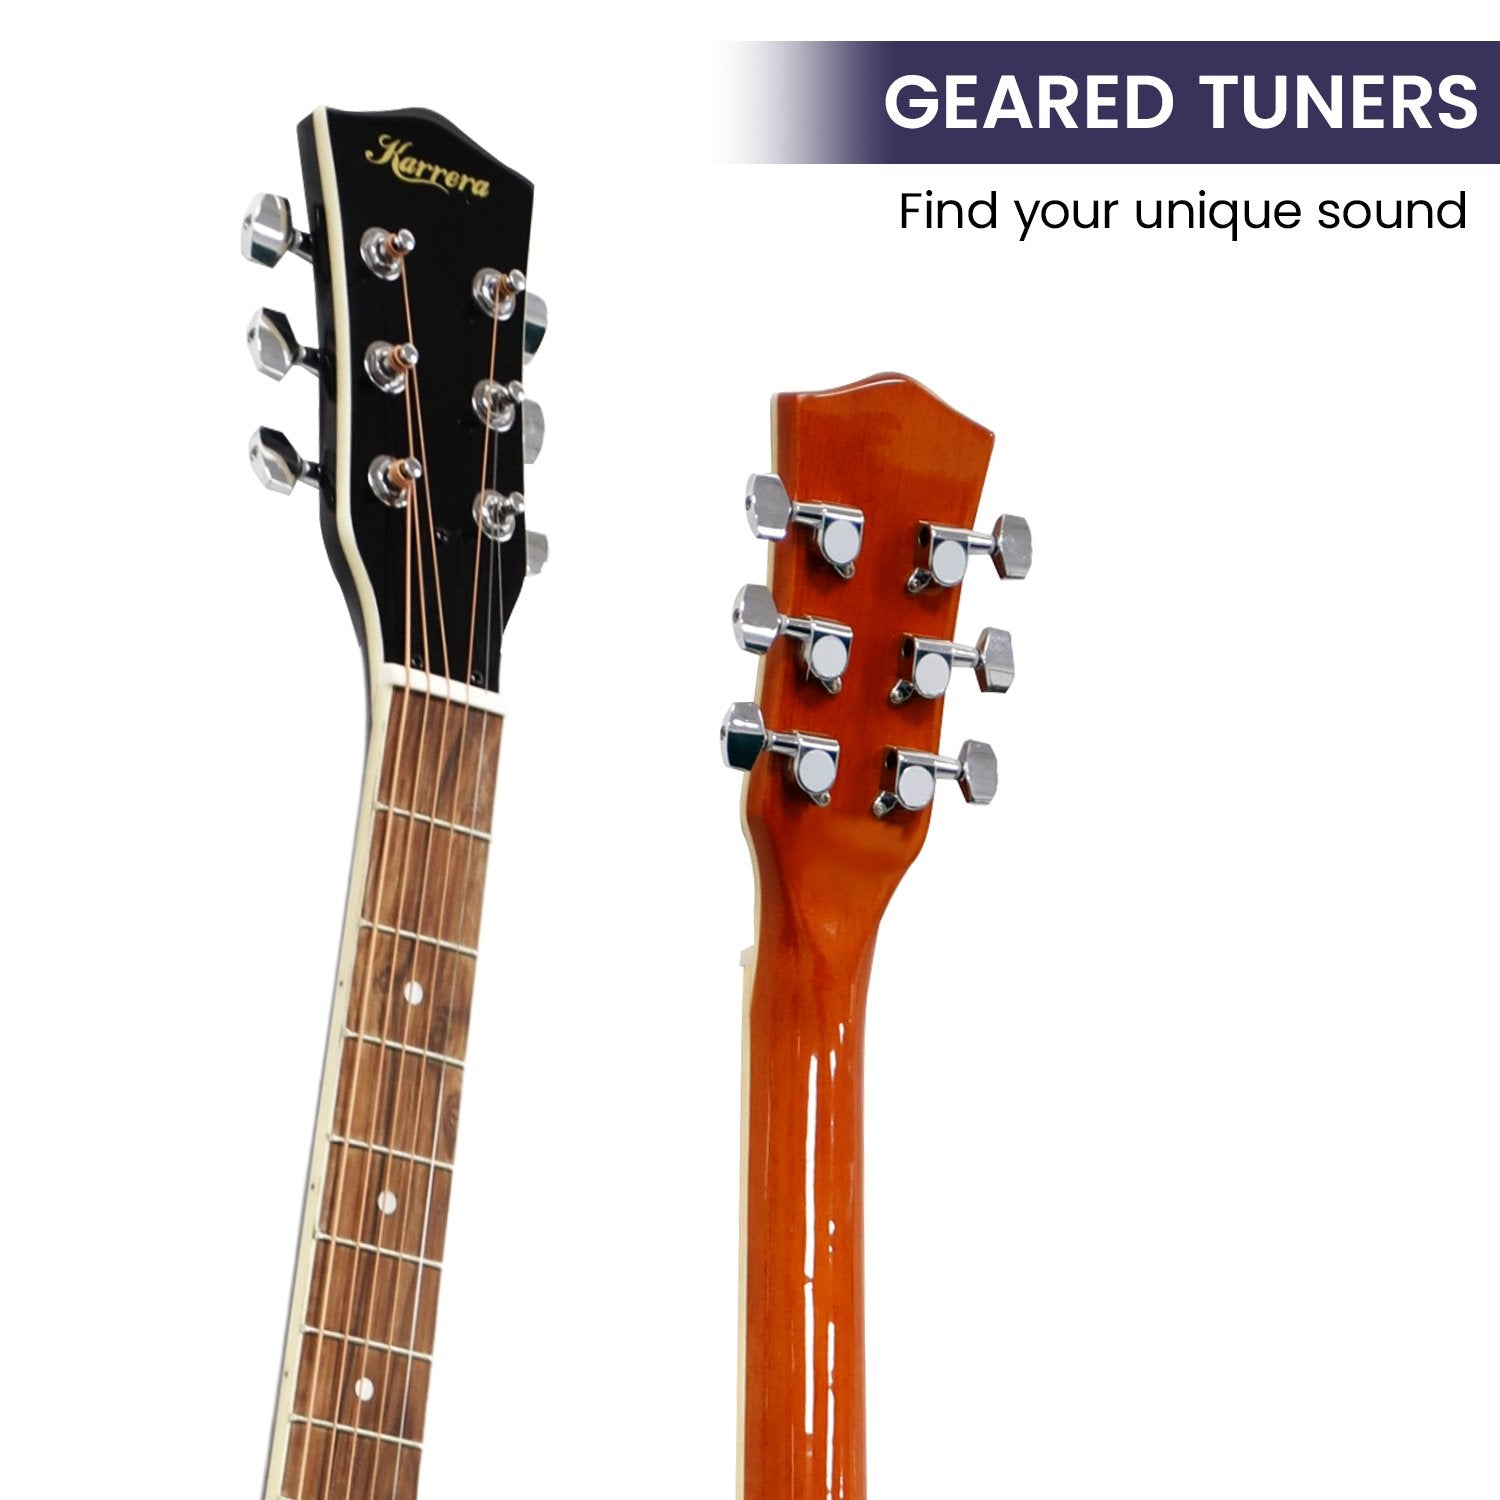 High-Gloss 40in Sunburst Resonator Guitar w/ EQ & Tuner